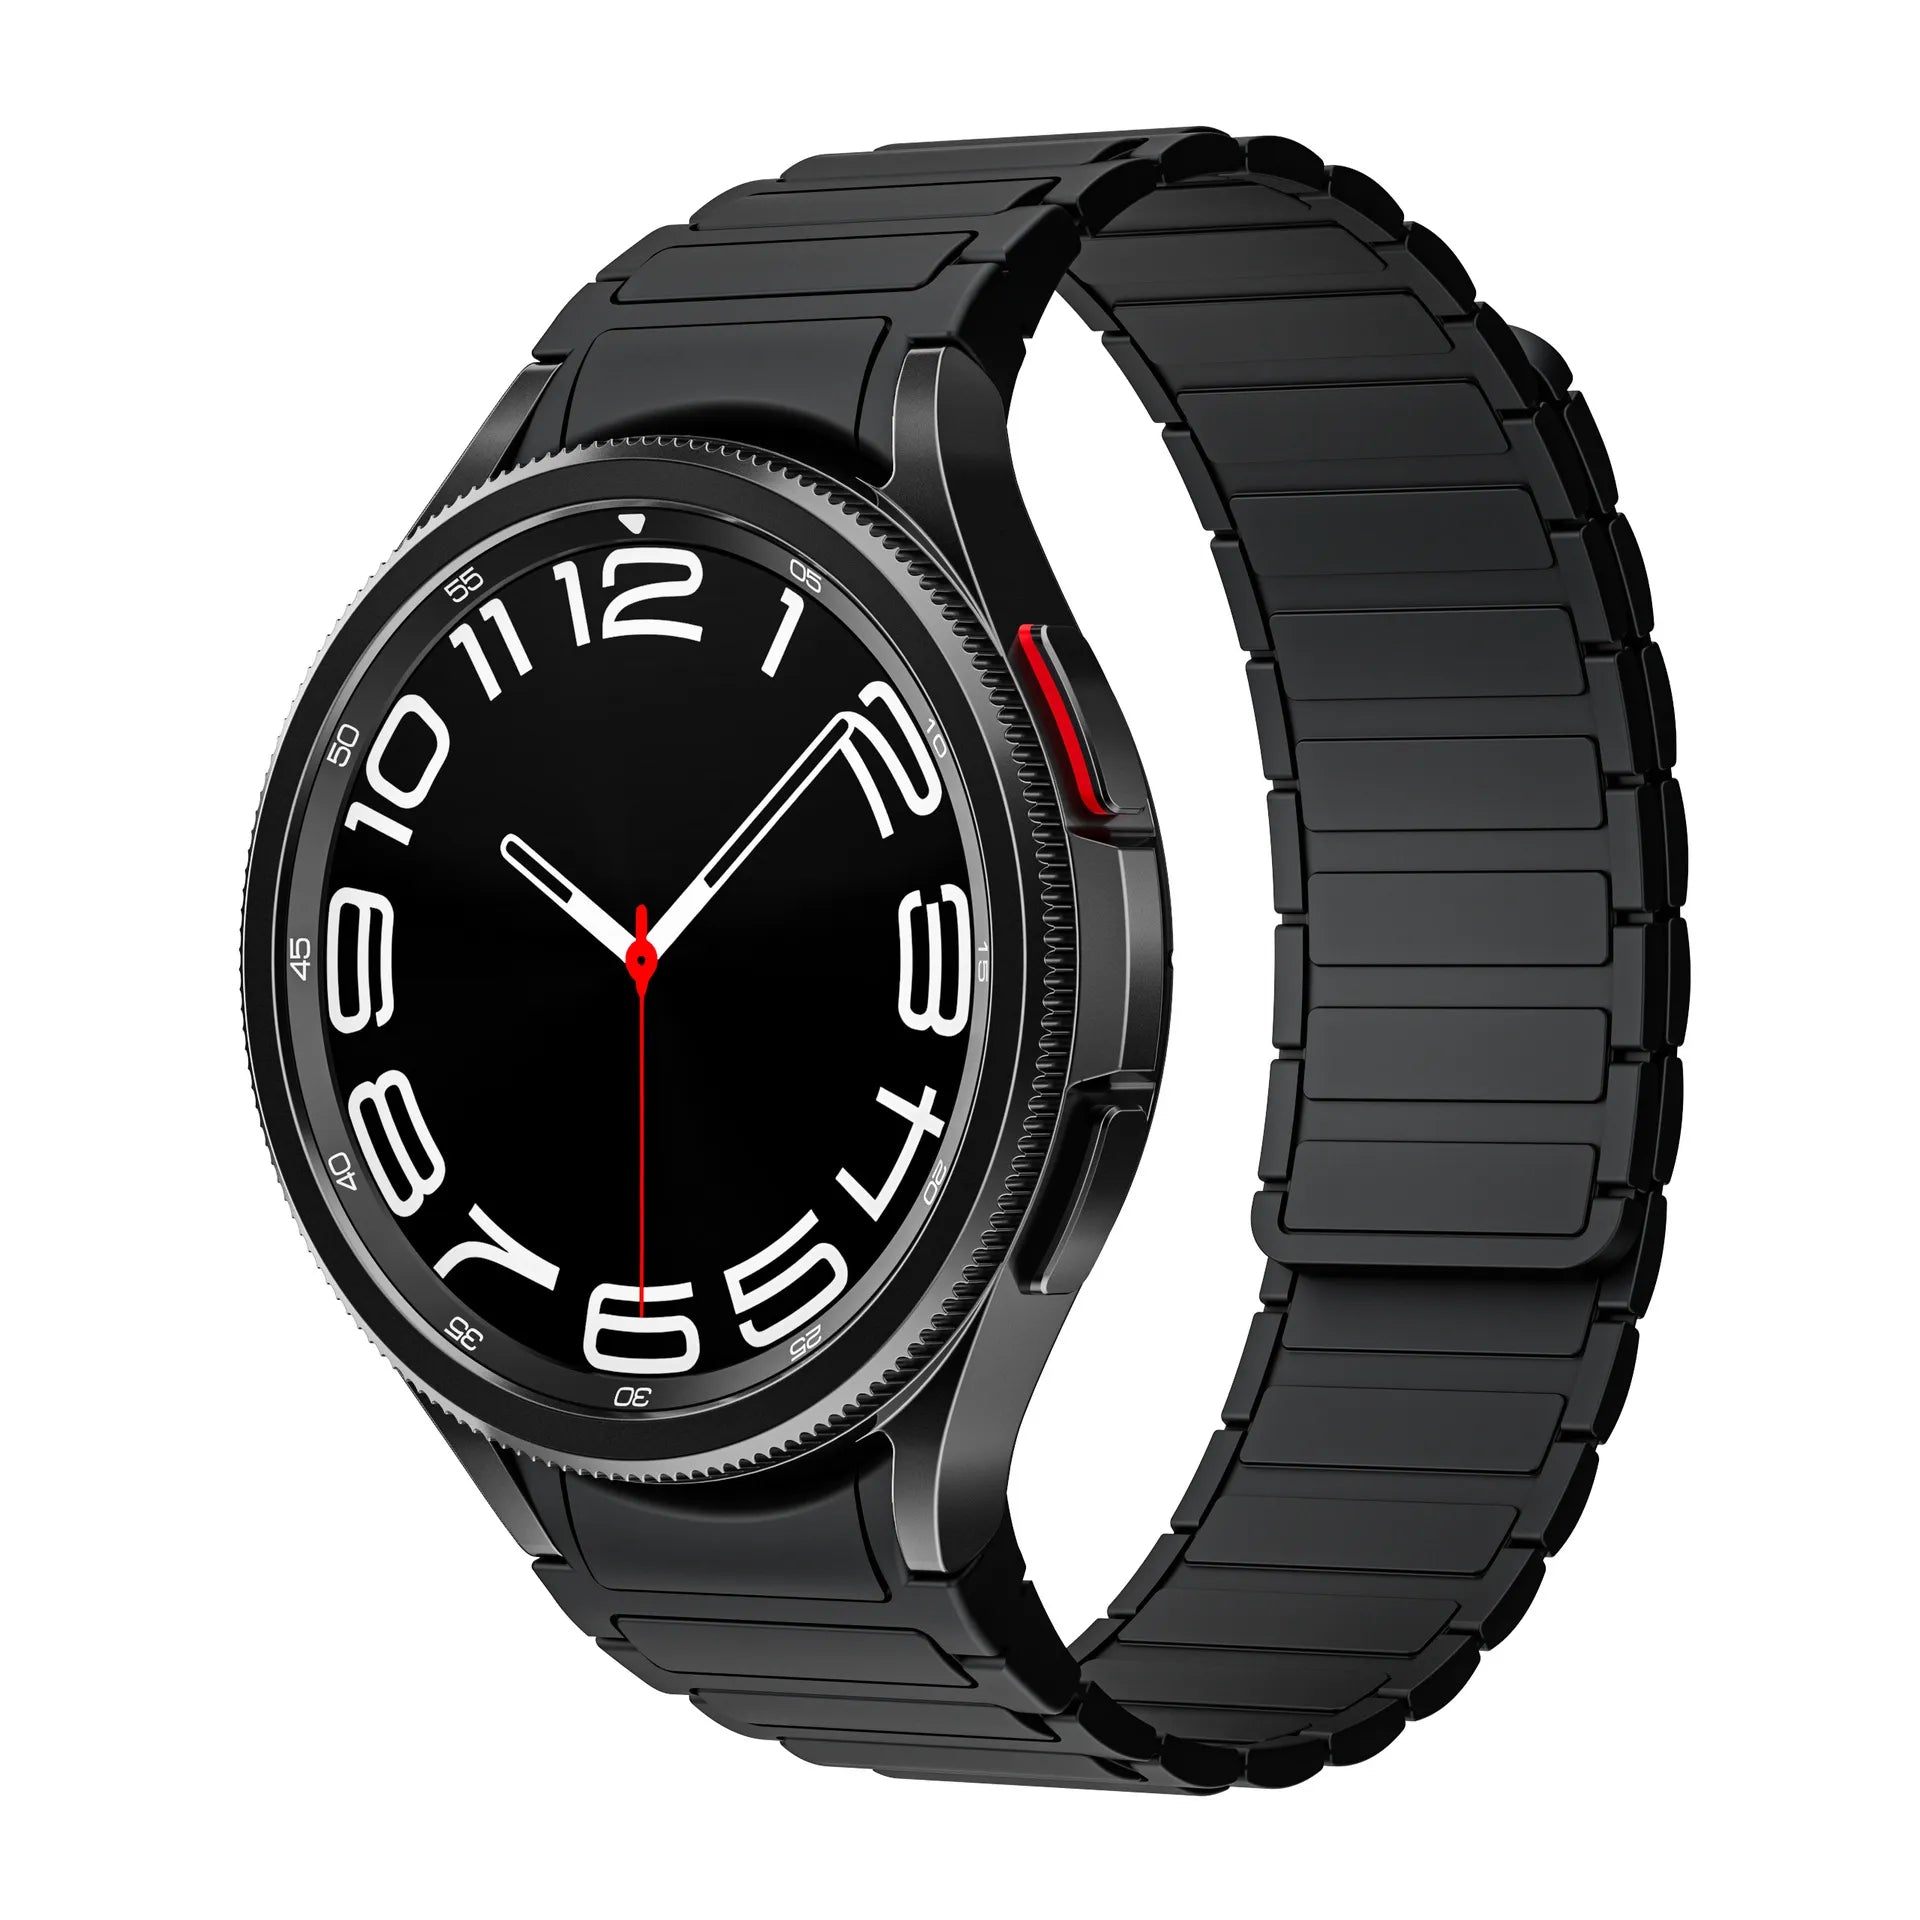 Galaxy Watch silicone band#color_Black